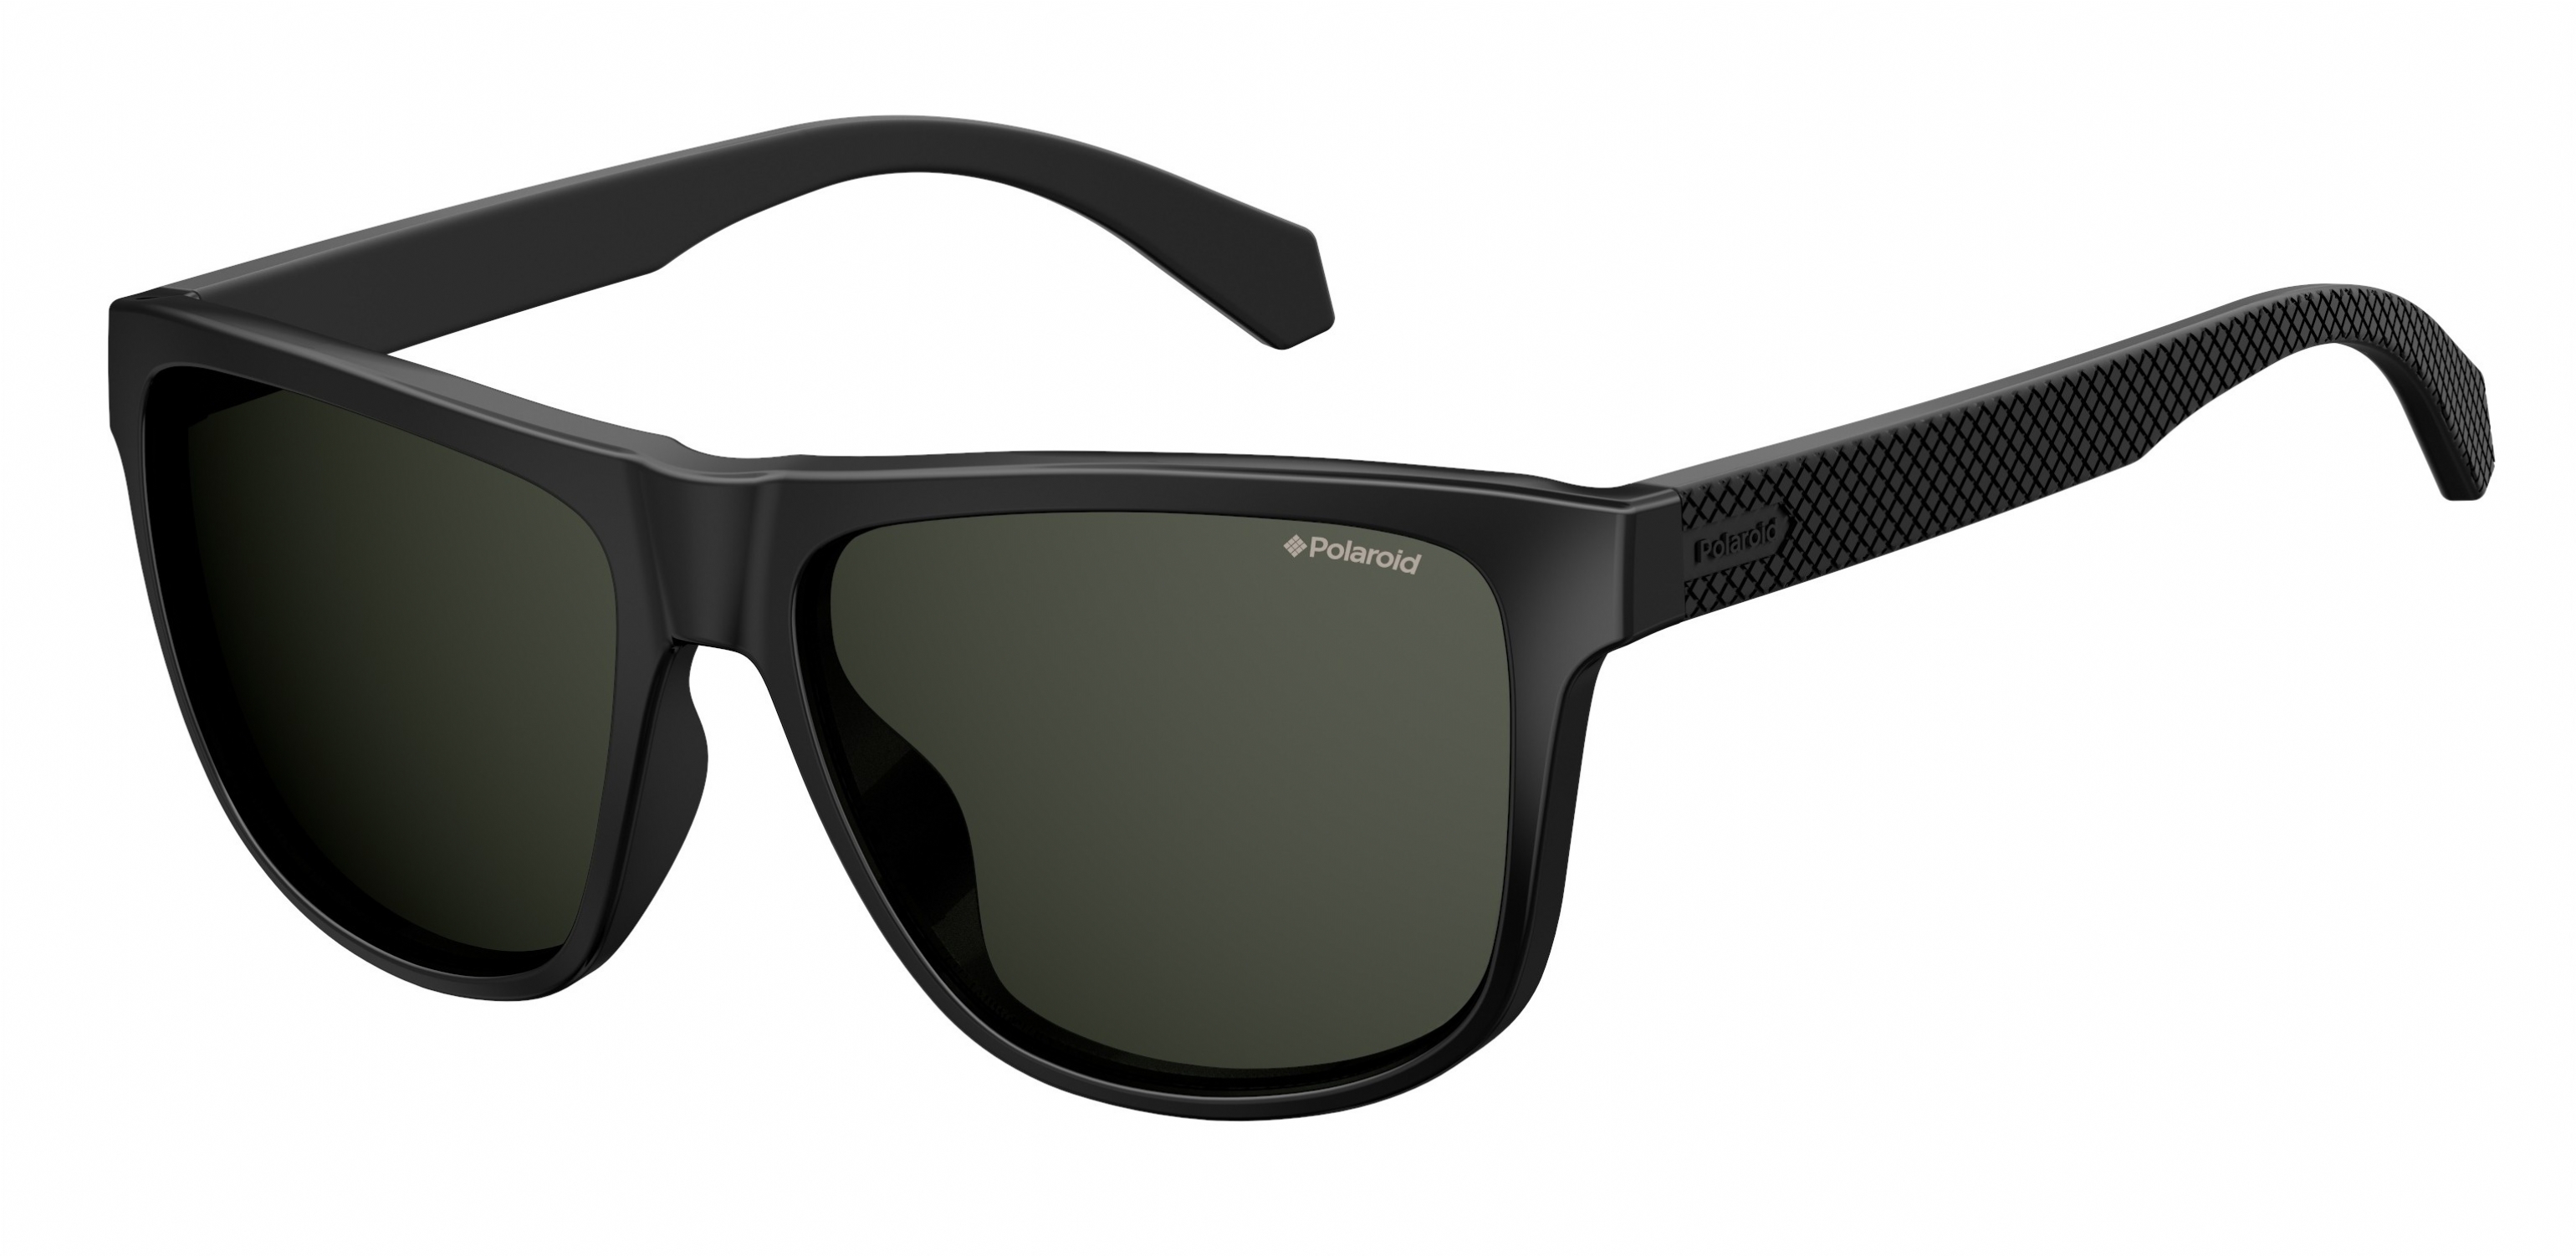 Buy Polaroid Sunglasses directly from OpticsFast.com